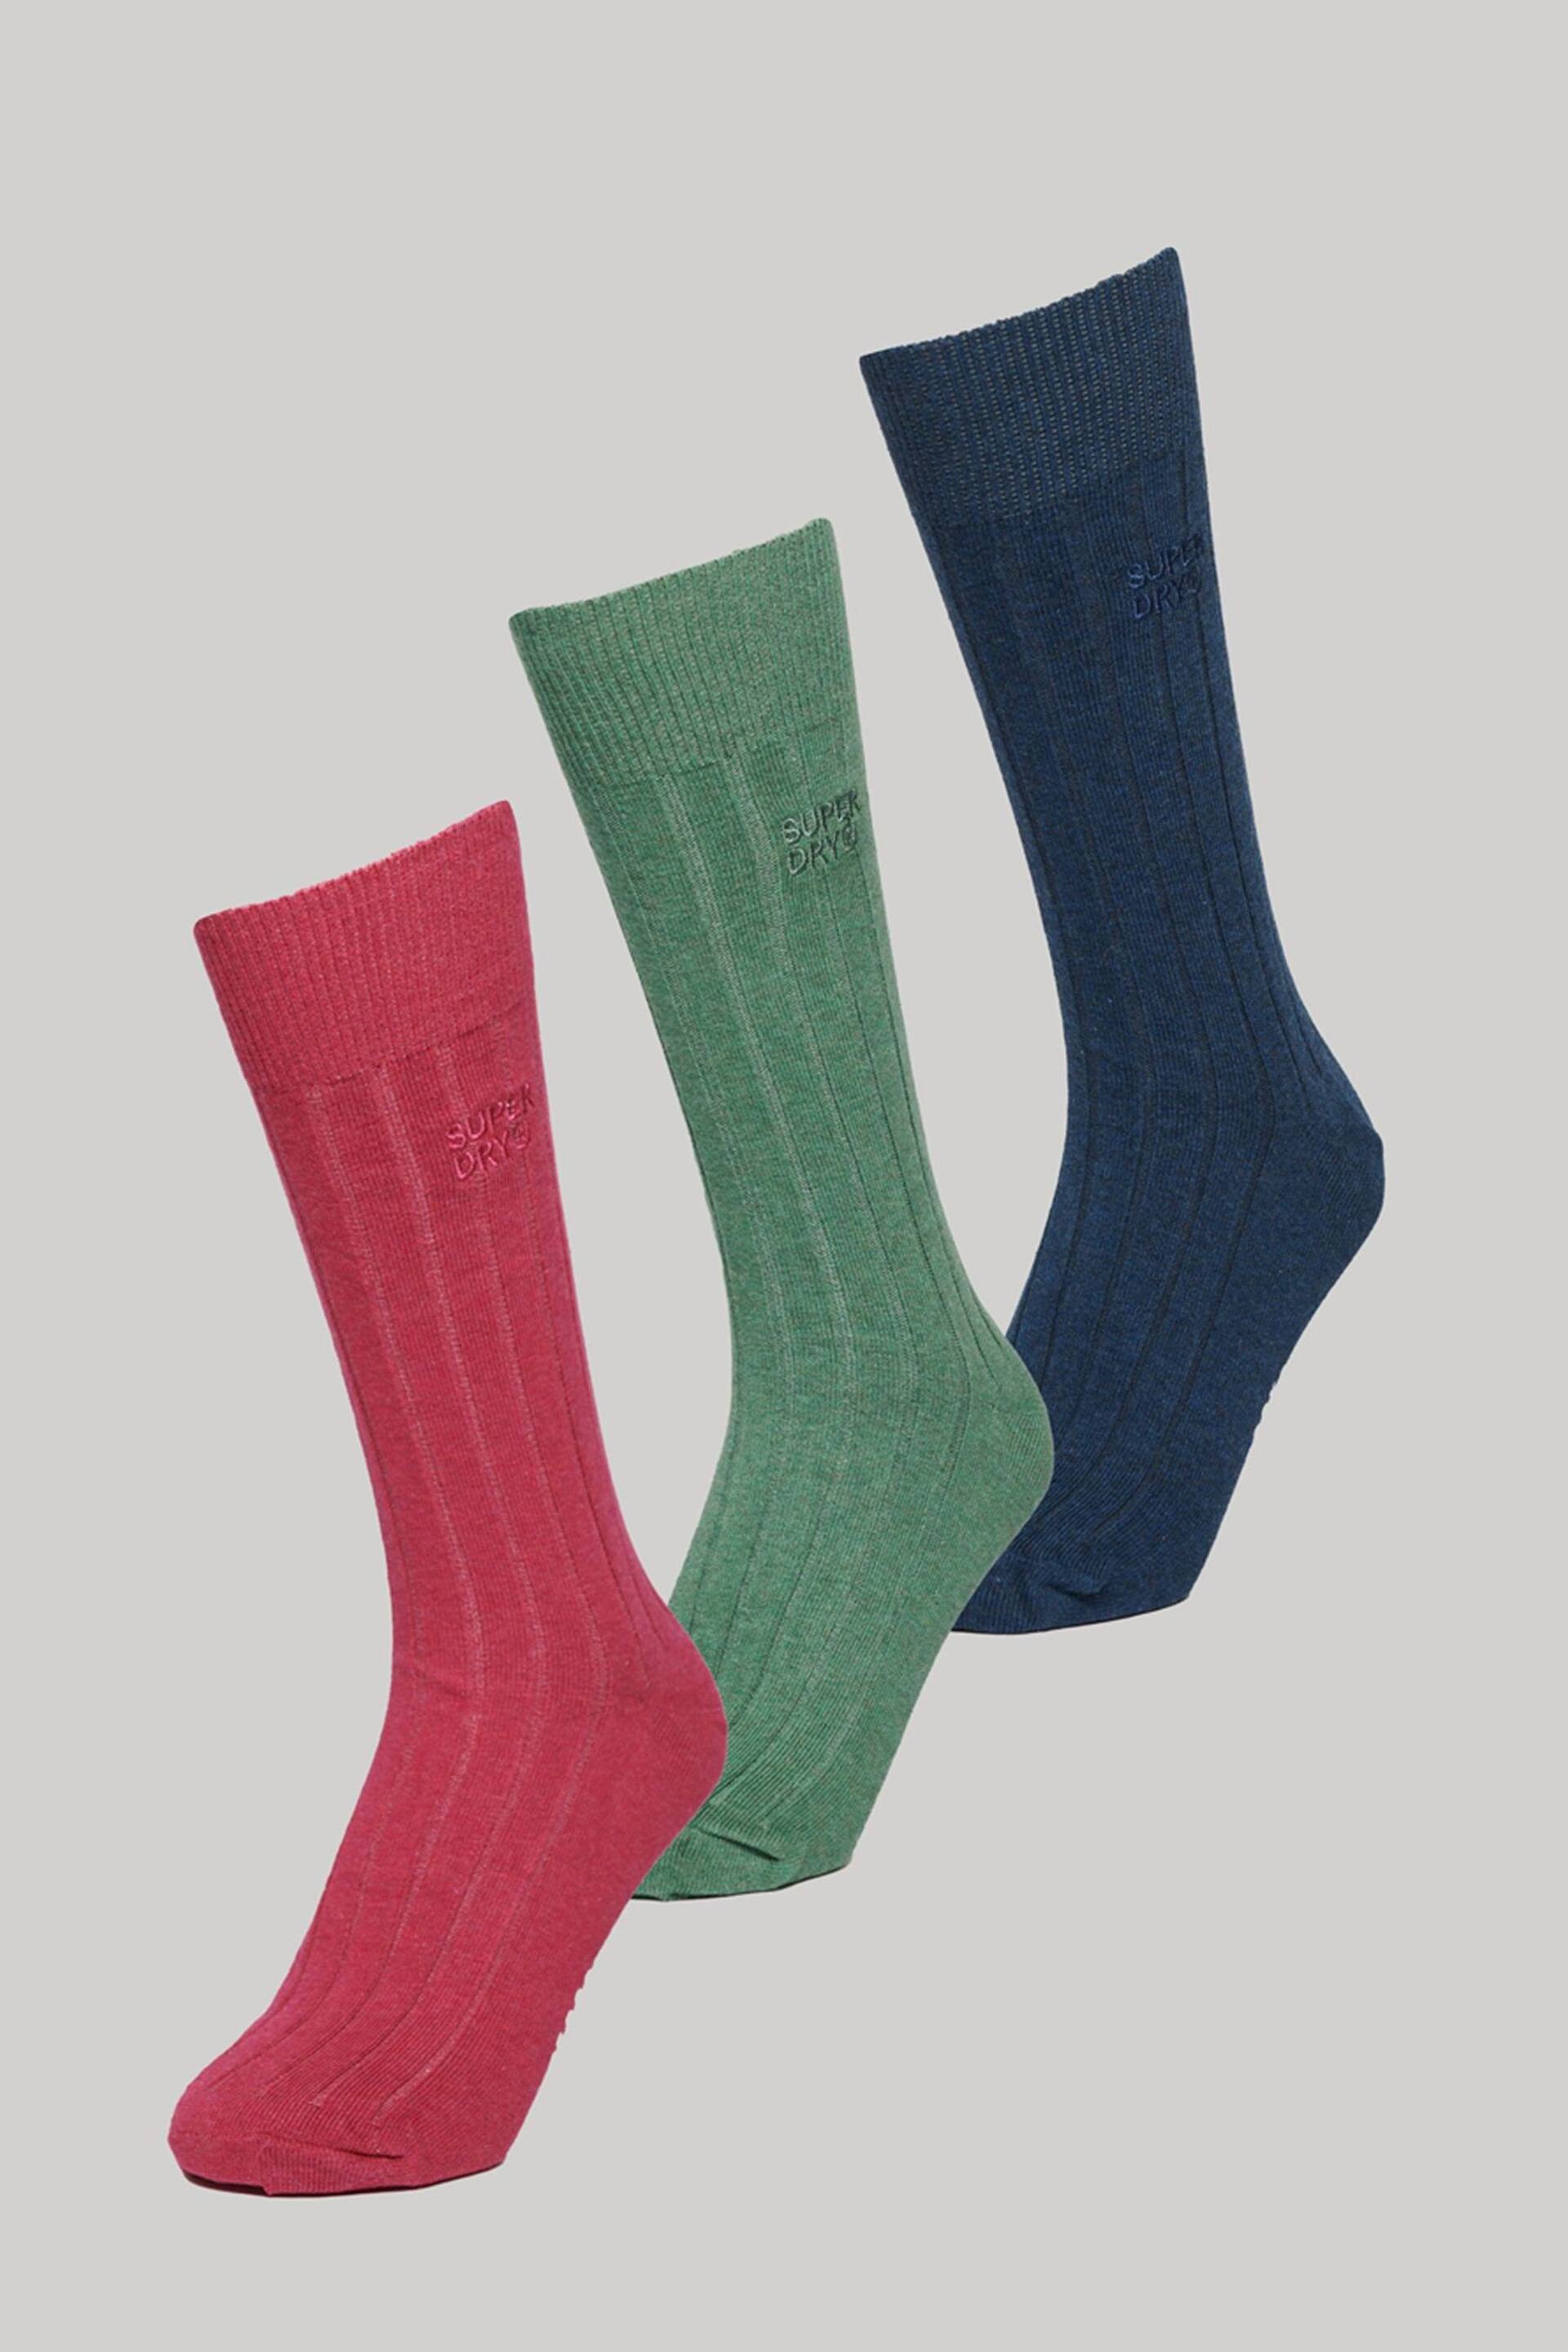 Superdry Blue Organic Cotton Unisex Core Rib Crew Socks 3 Pack - Image 1 of 5